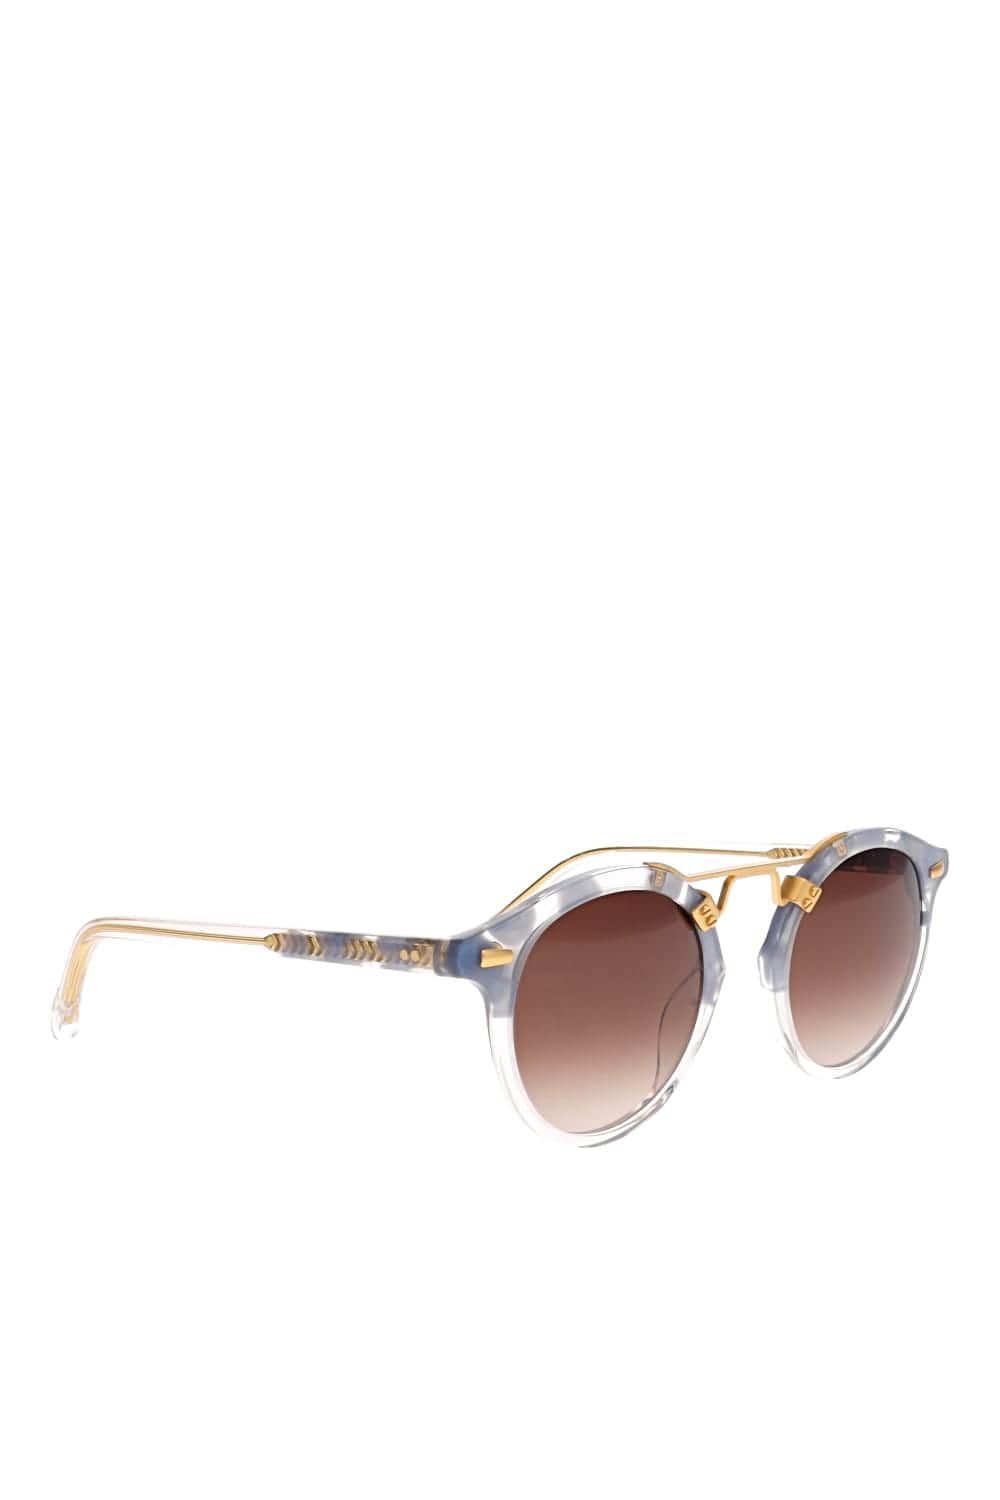 KREWE St. Louis Sunglasses ST. LOUIS OPALINE CRYSTAL